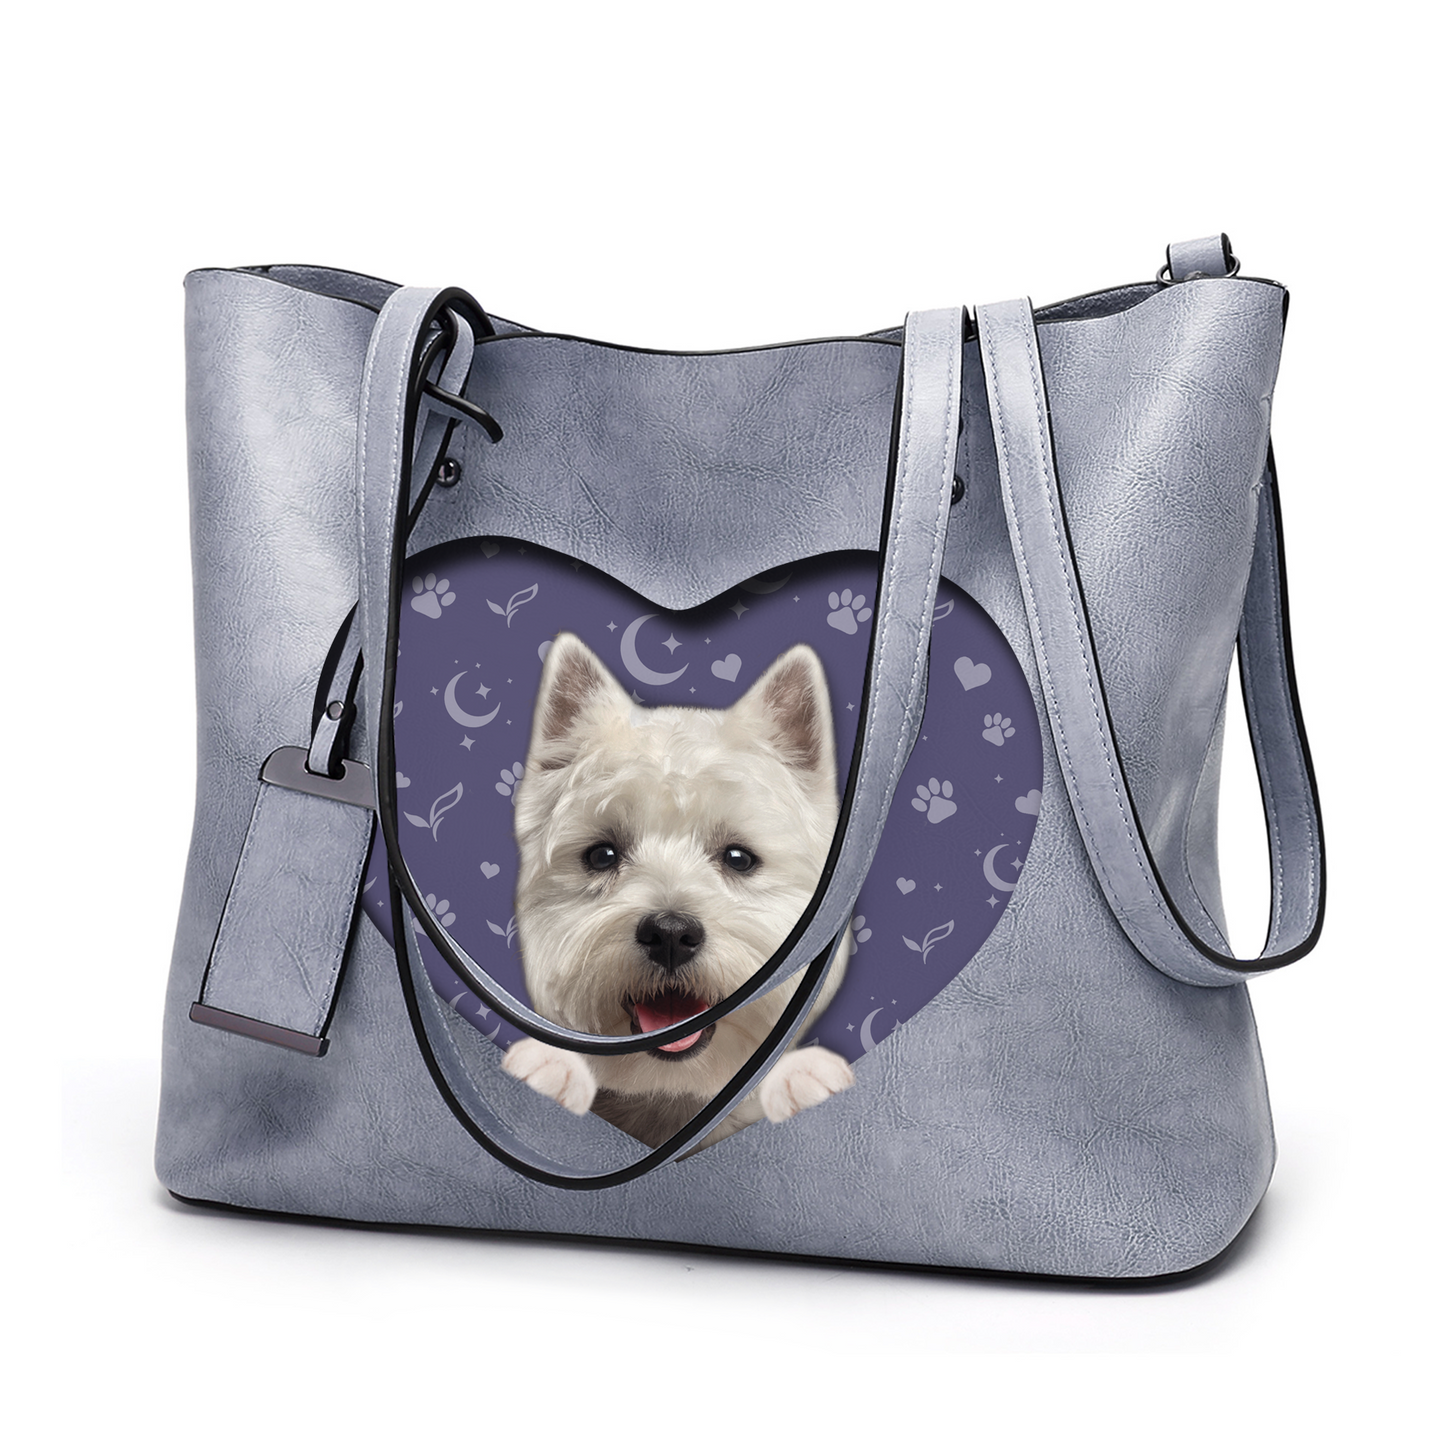 I Know I'm Cute - West Highland White Terrier Glamour Handbag V1 - 9